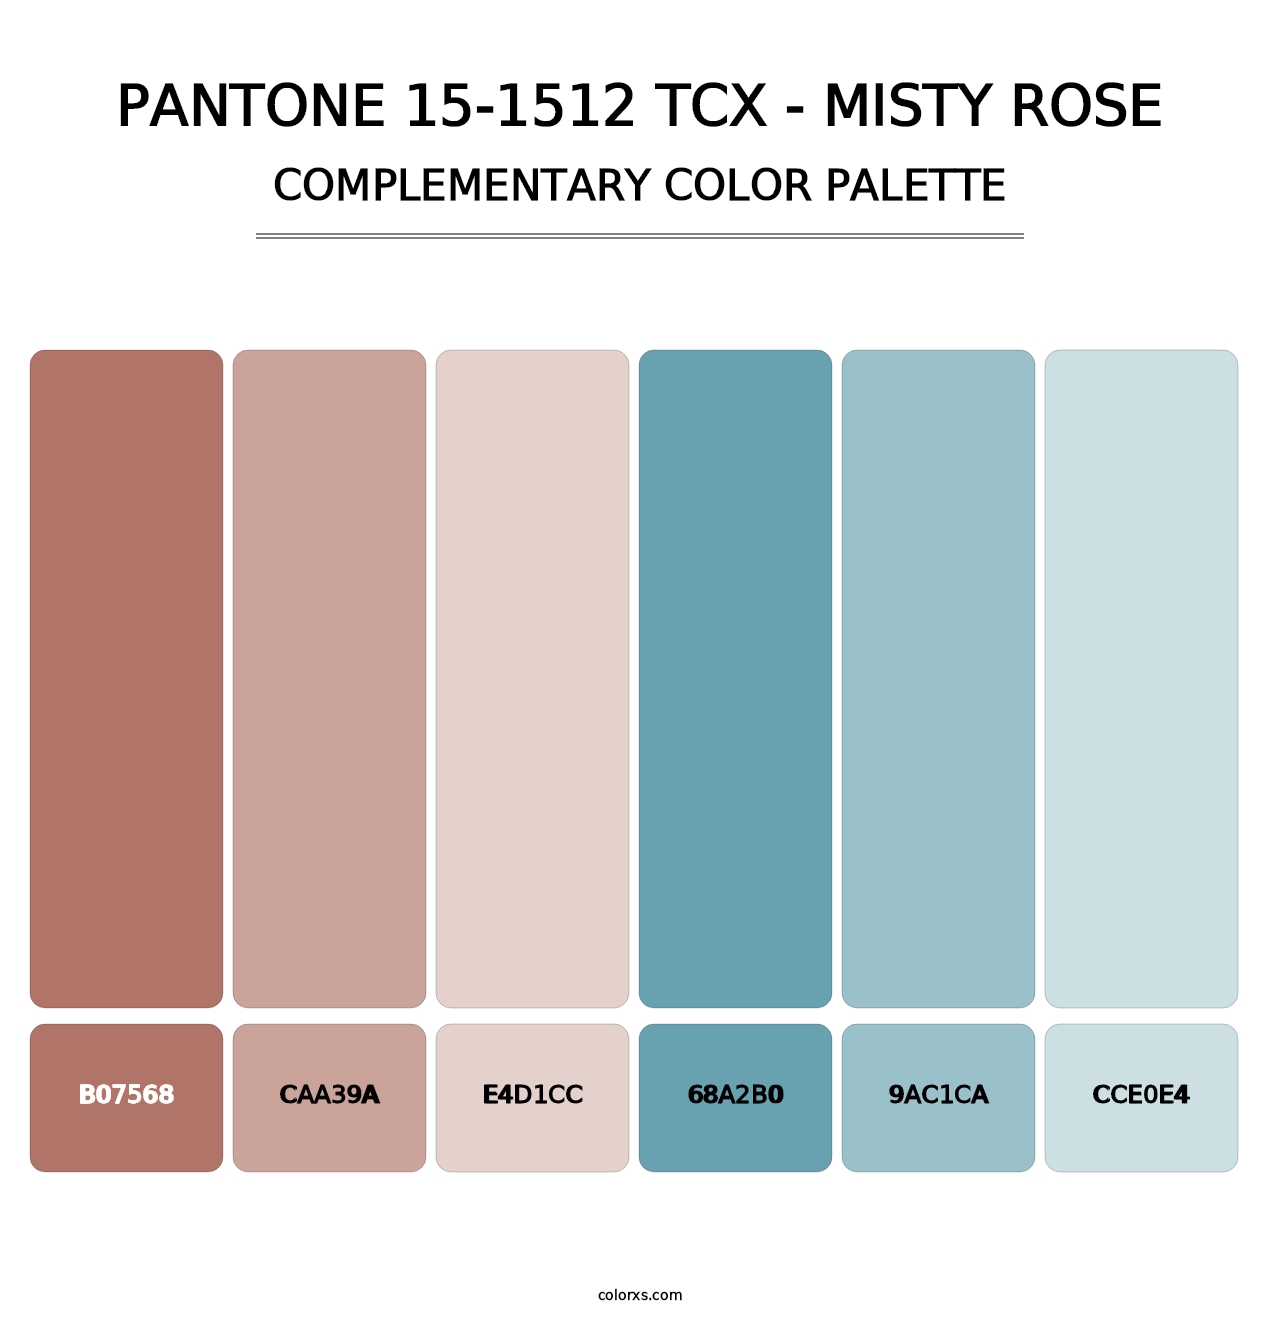 PANTONE 15-1512 TCX - Misty Rose - Complementary Color Palette